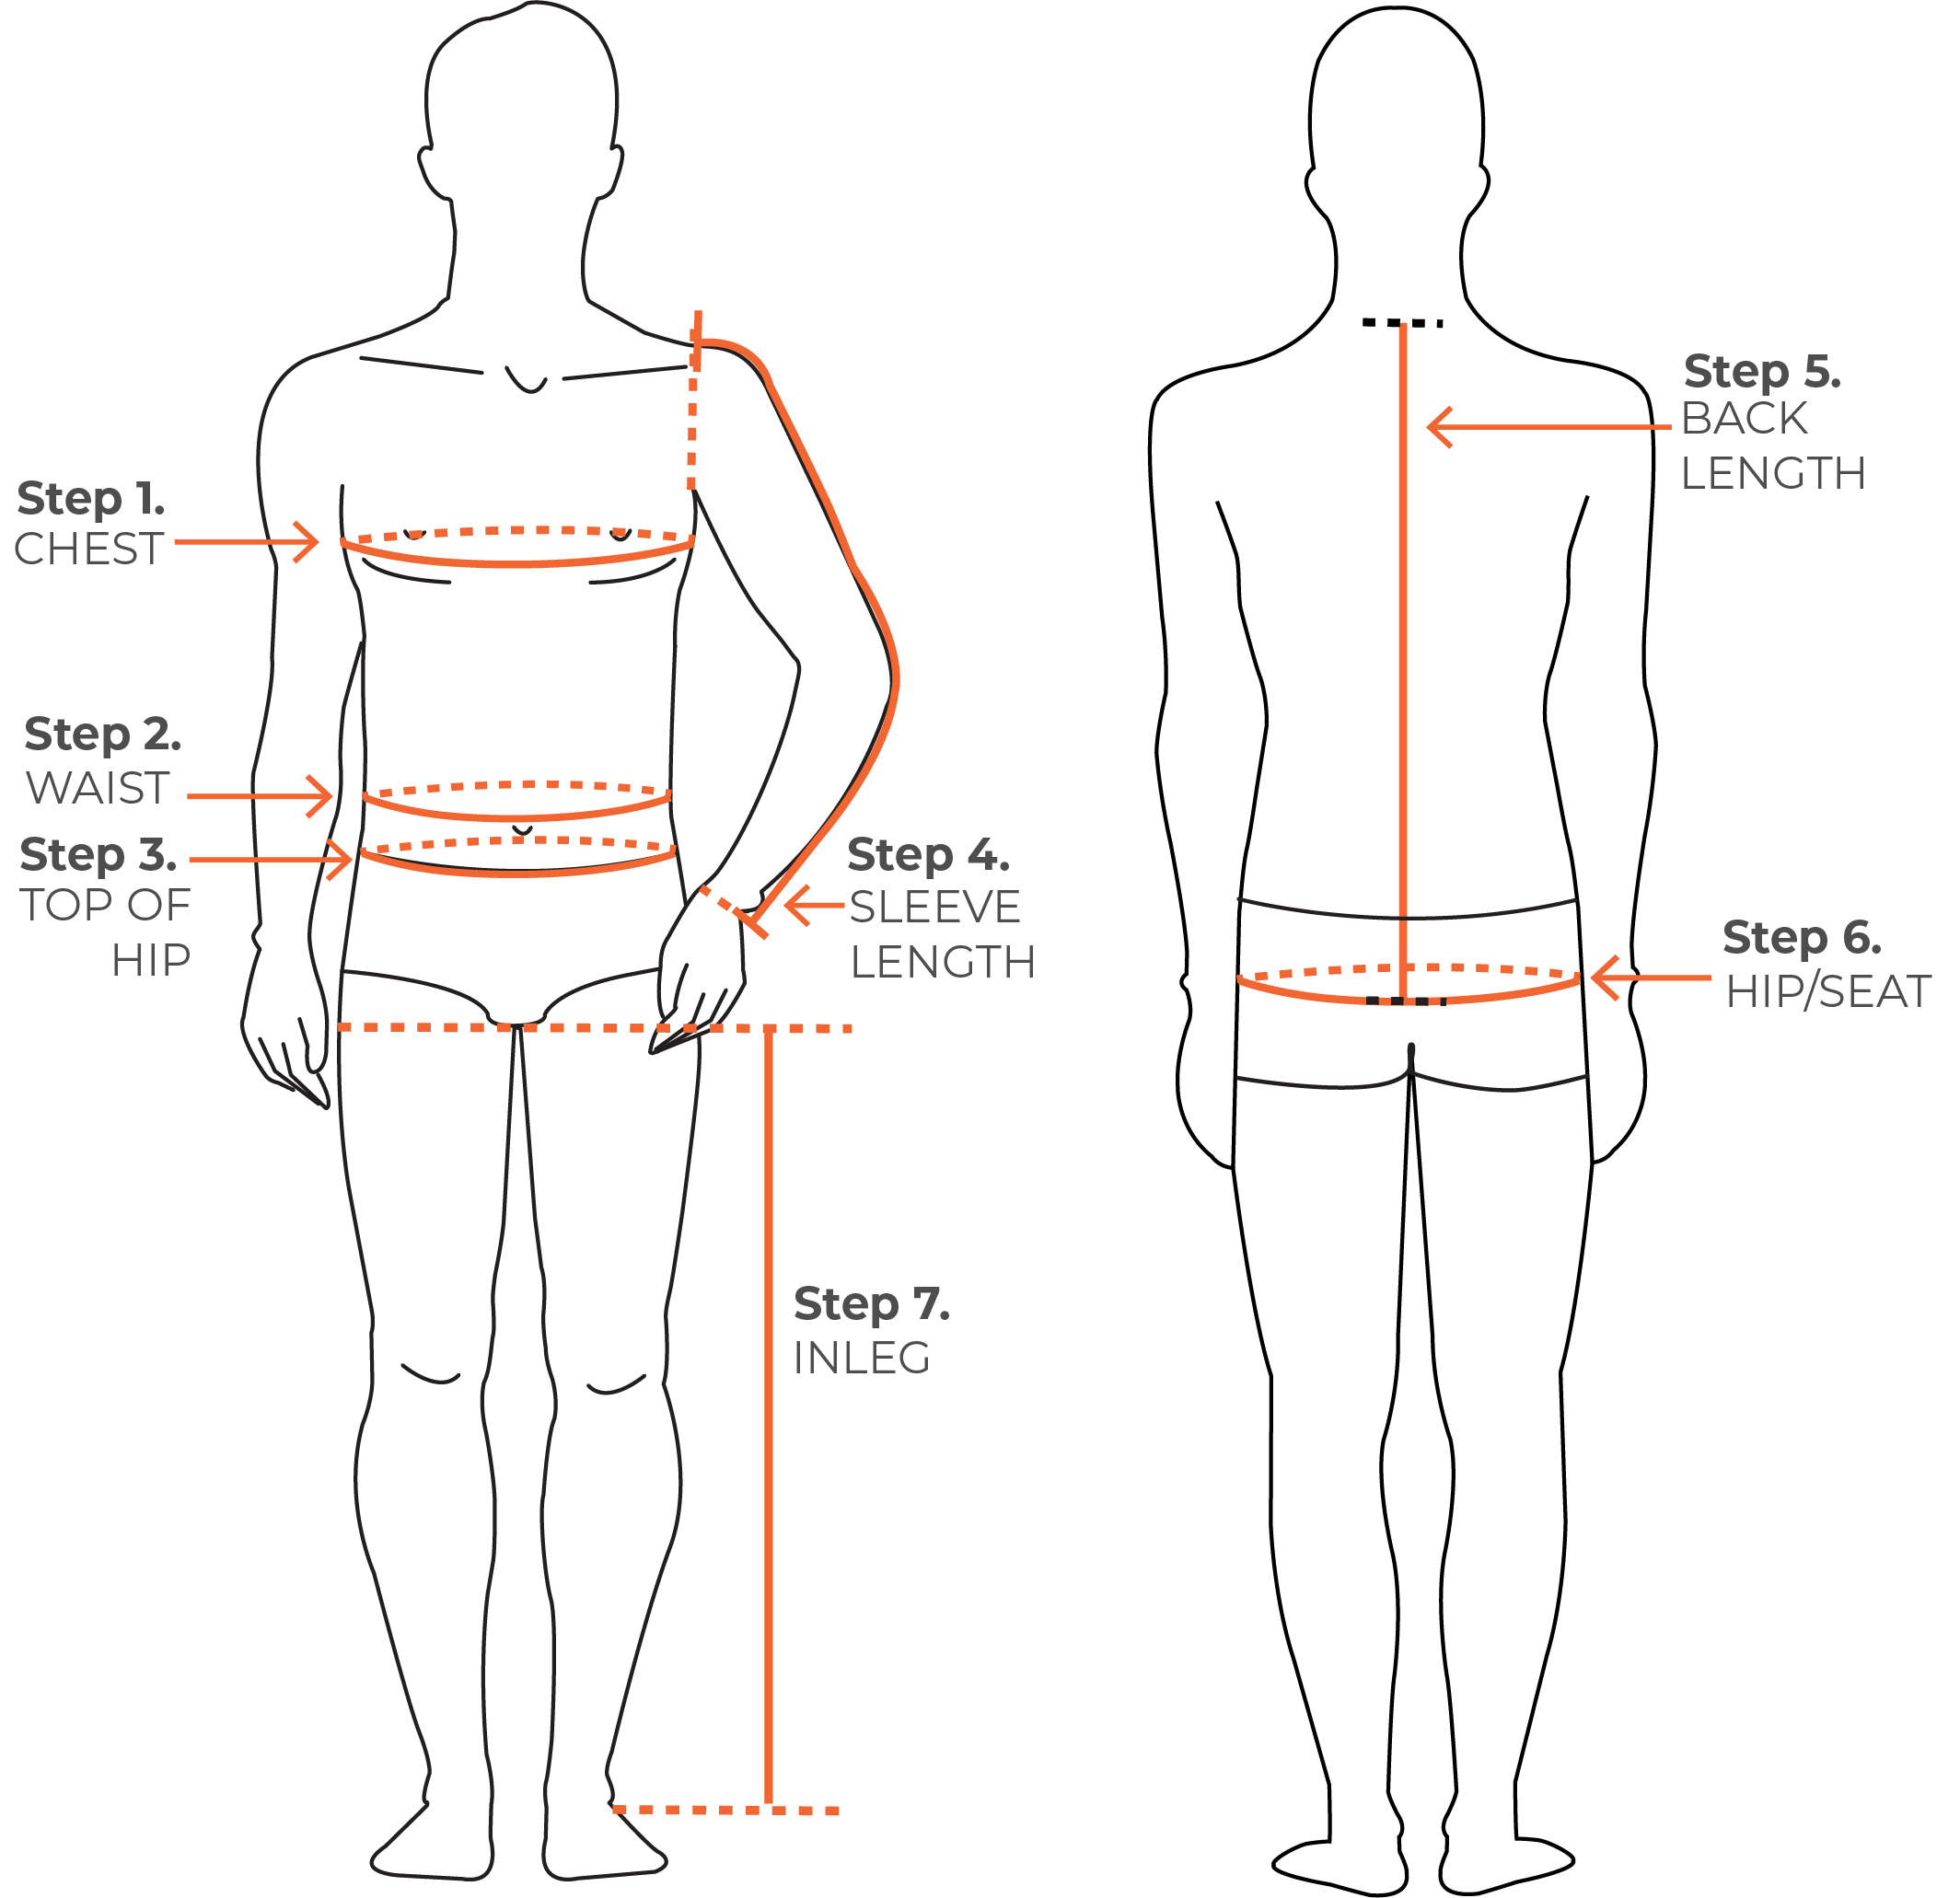 men-measuring-guide-illustration-with-top-of-hip.jpg